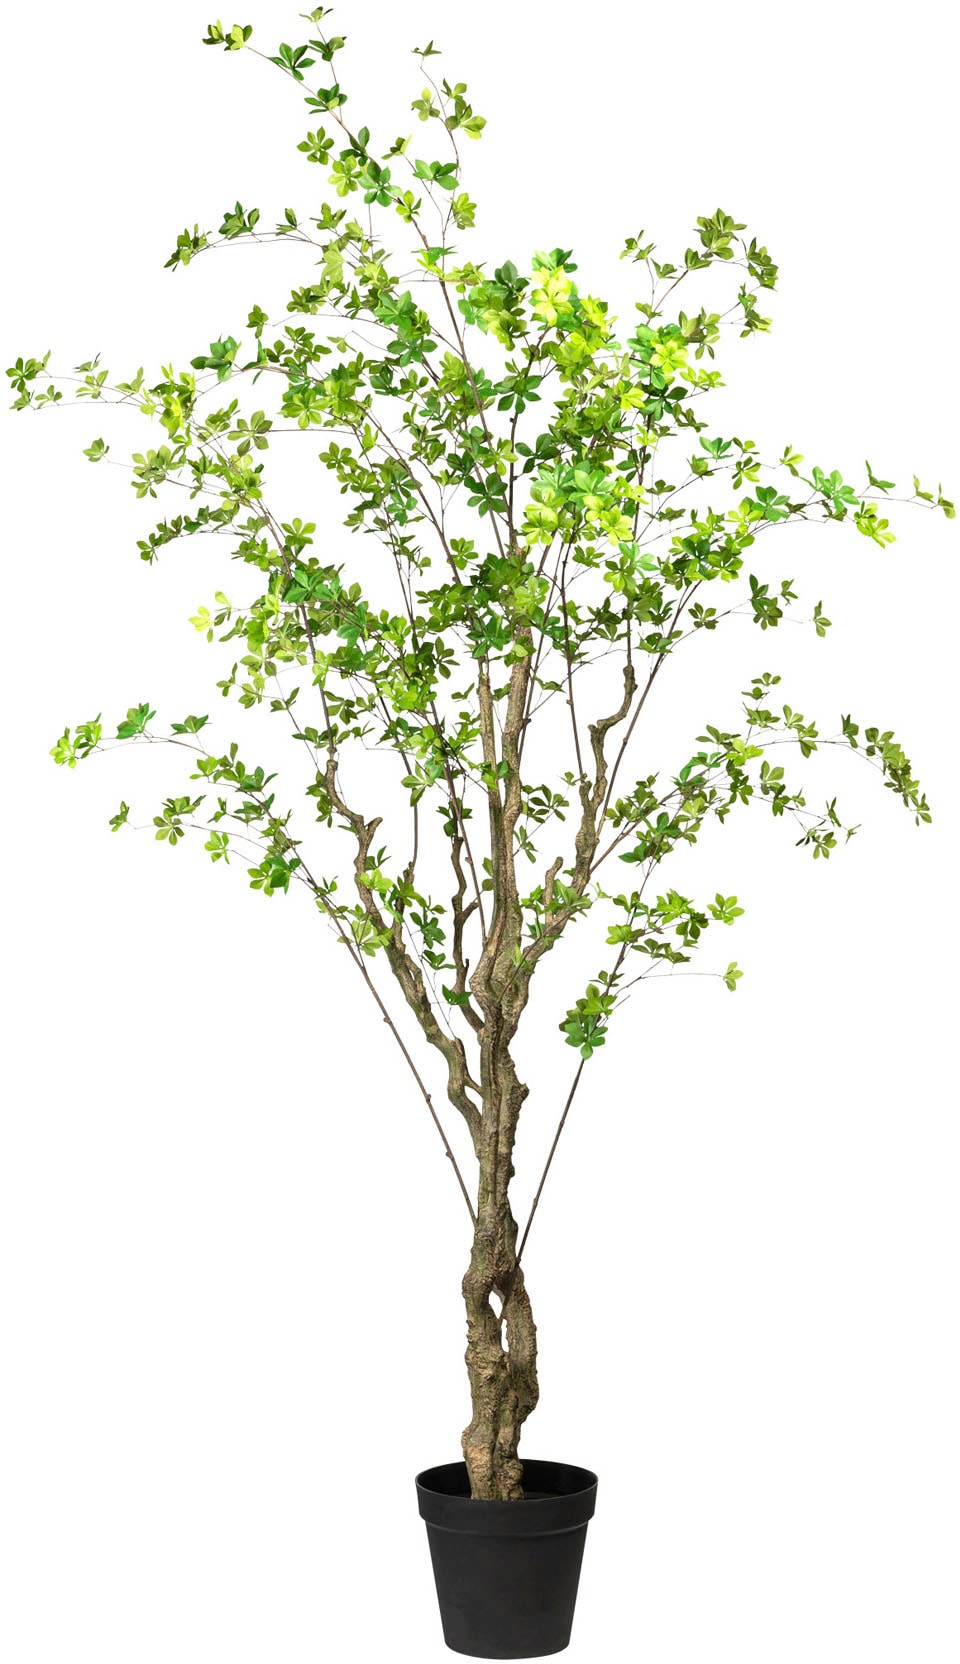 Creativ green Kunstbaum »Louisiana-Baum« jetzt kaufen